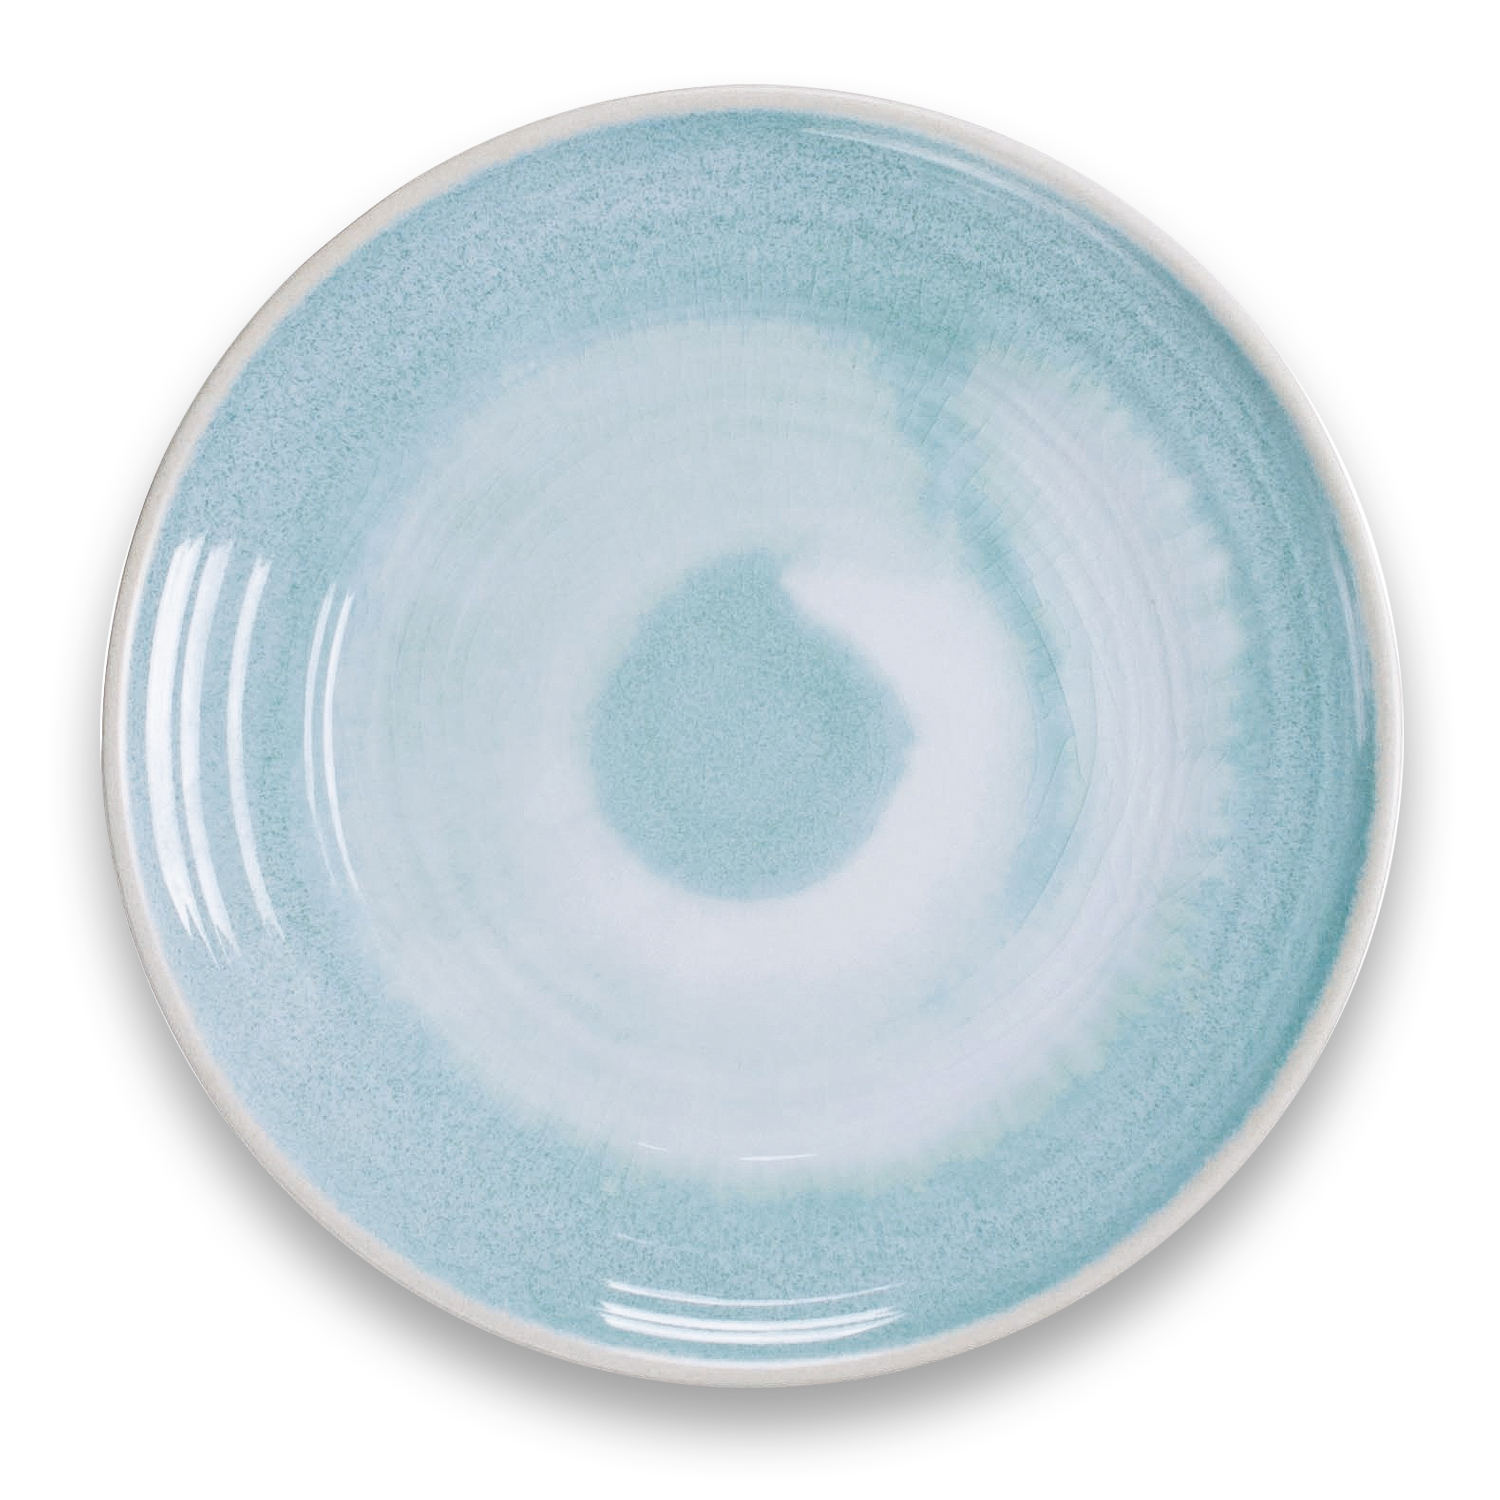 Aqua Raku Glazed Collection 12 Piece Melamine Dinnerware Set by TarHong 